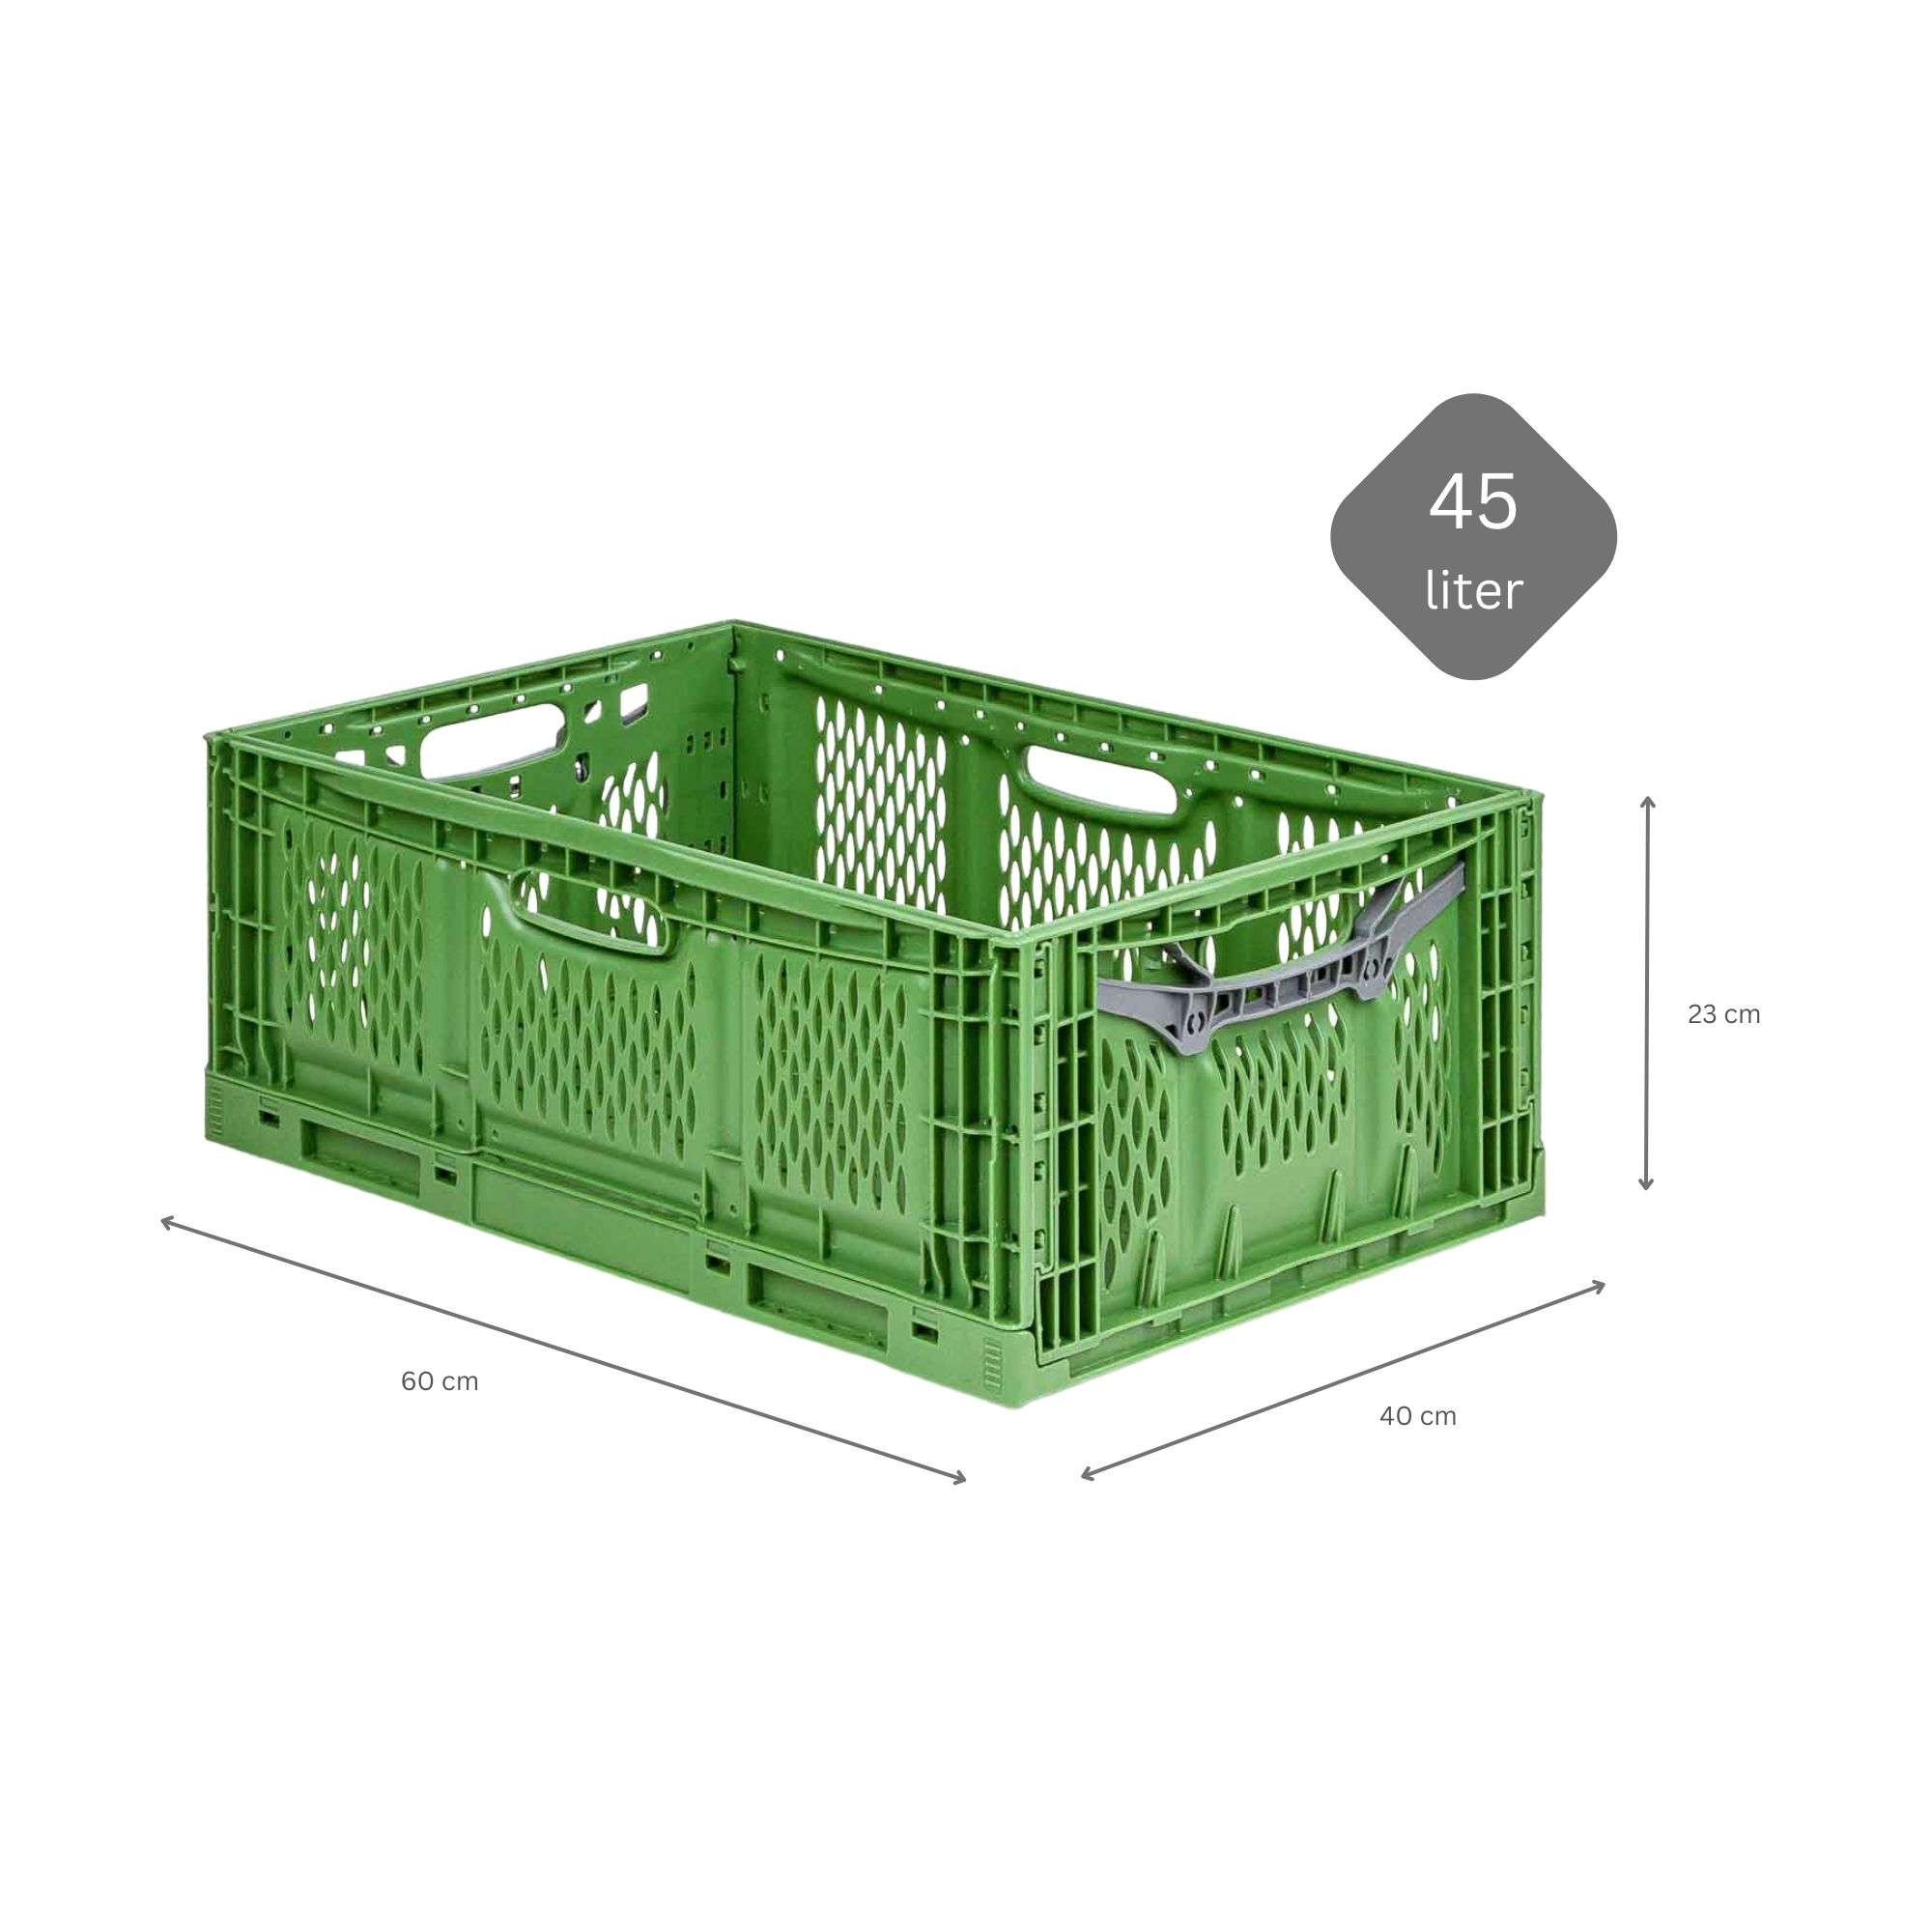 Stabile Profi-Klappbox Chameleon in Industriequalität | HxBxT 23x40x60cm | 45 Liter | klappbar stapelbar durchbrochen lebensmittelecht | Eurobox Eurobehälter Transportbehälter Stapelbehlter Faltbox